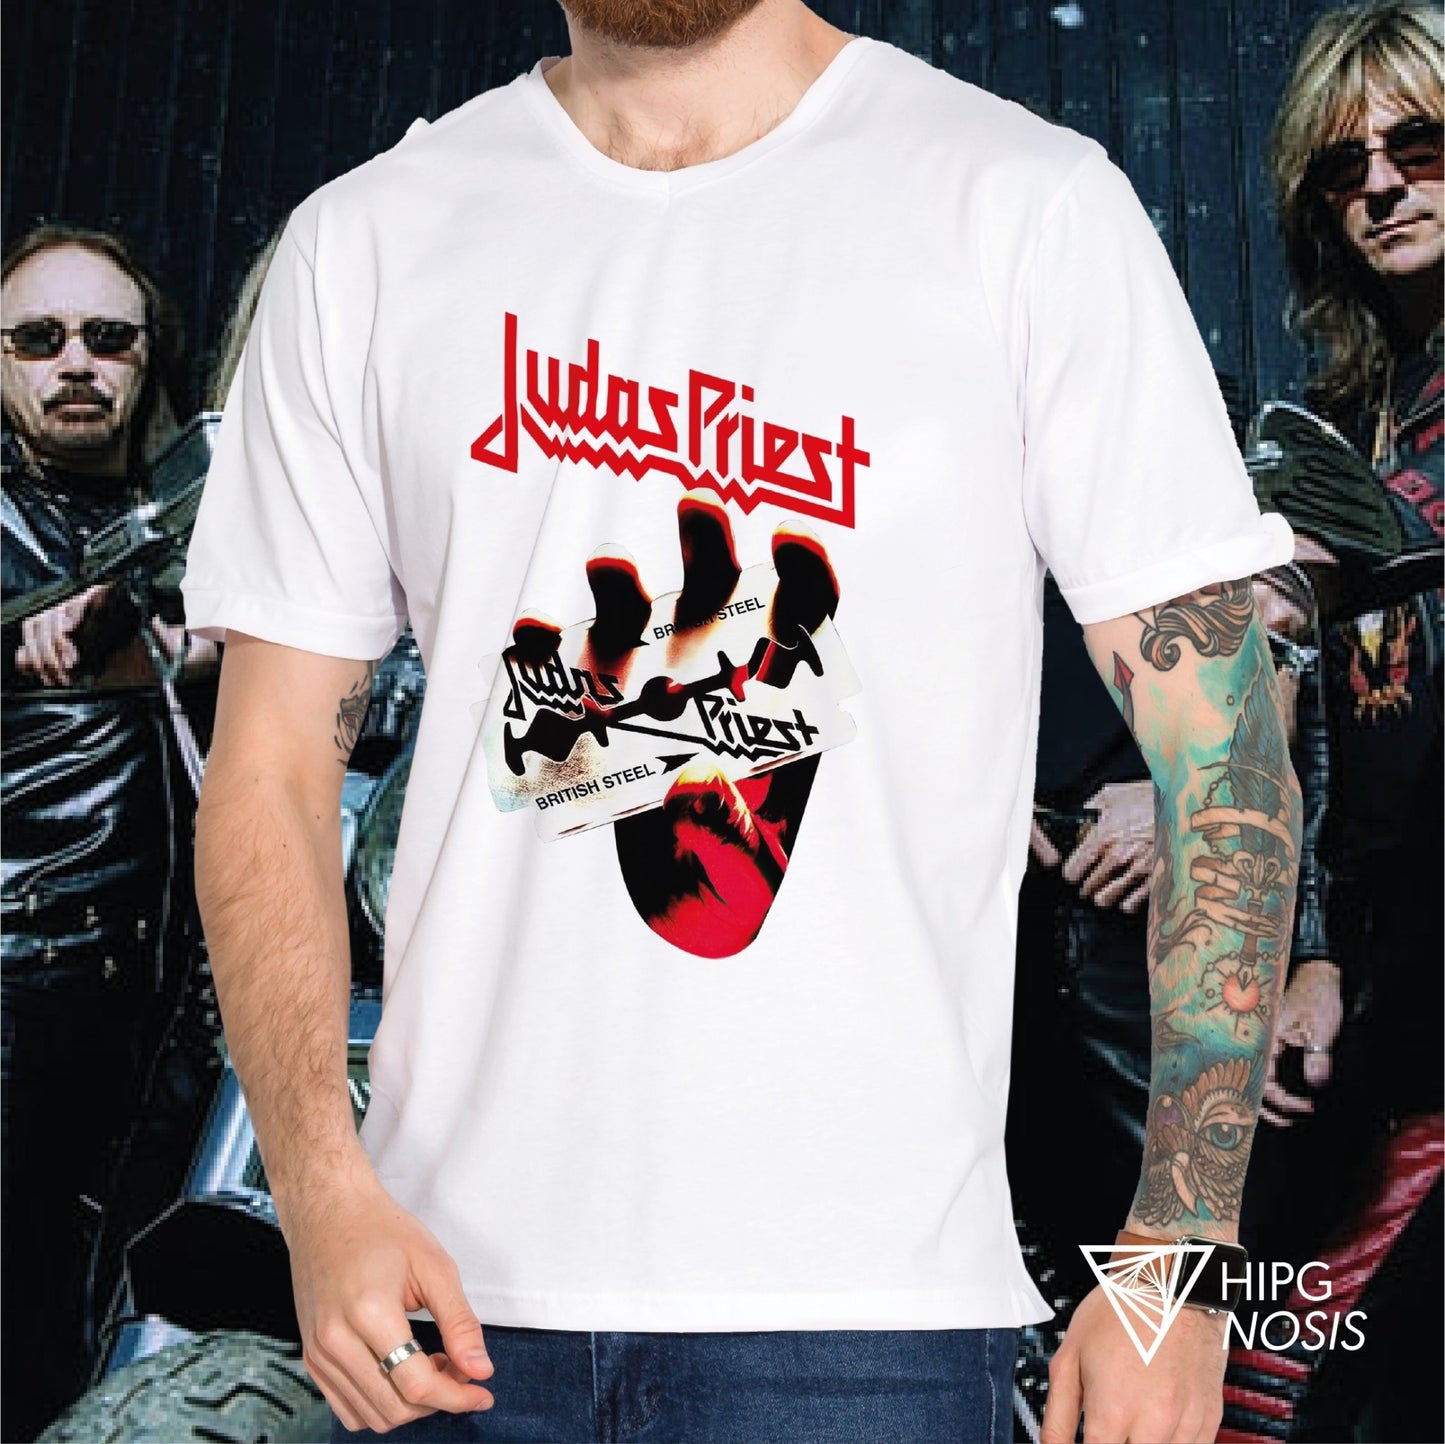 Judas Priest British Steel - Hipgnosis